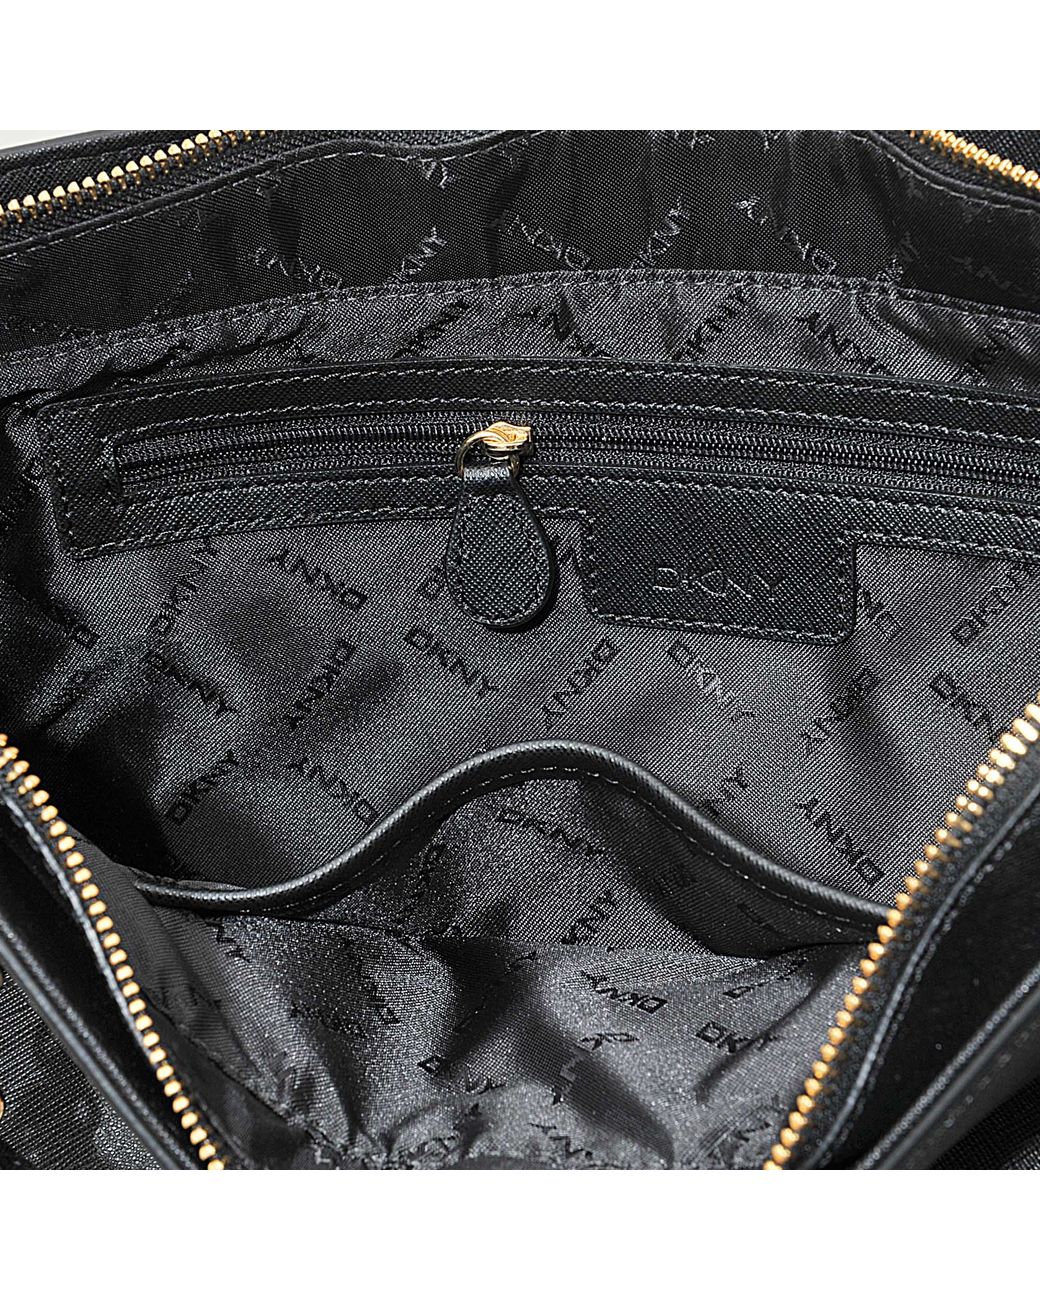 Dkny Bryant Park Saffiano Leather Large Tote Black Handbag Bag New– Bag  Lady Shop